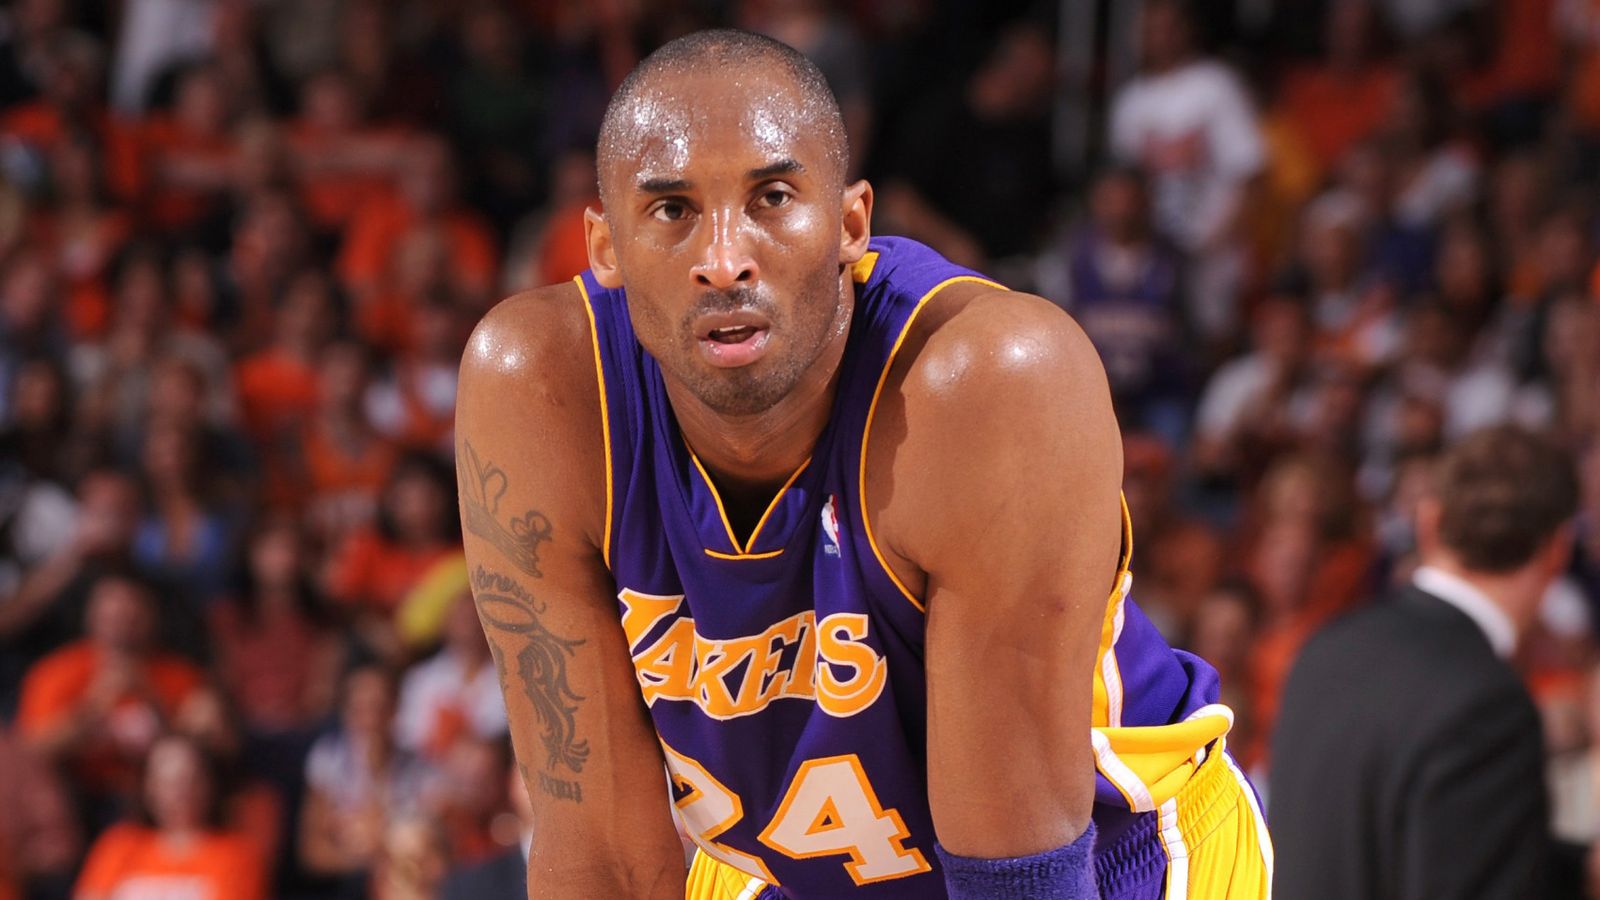 Kobe Bryant left deep legacy in LA sports, basketball world – KGET 17